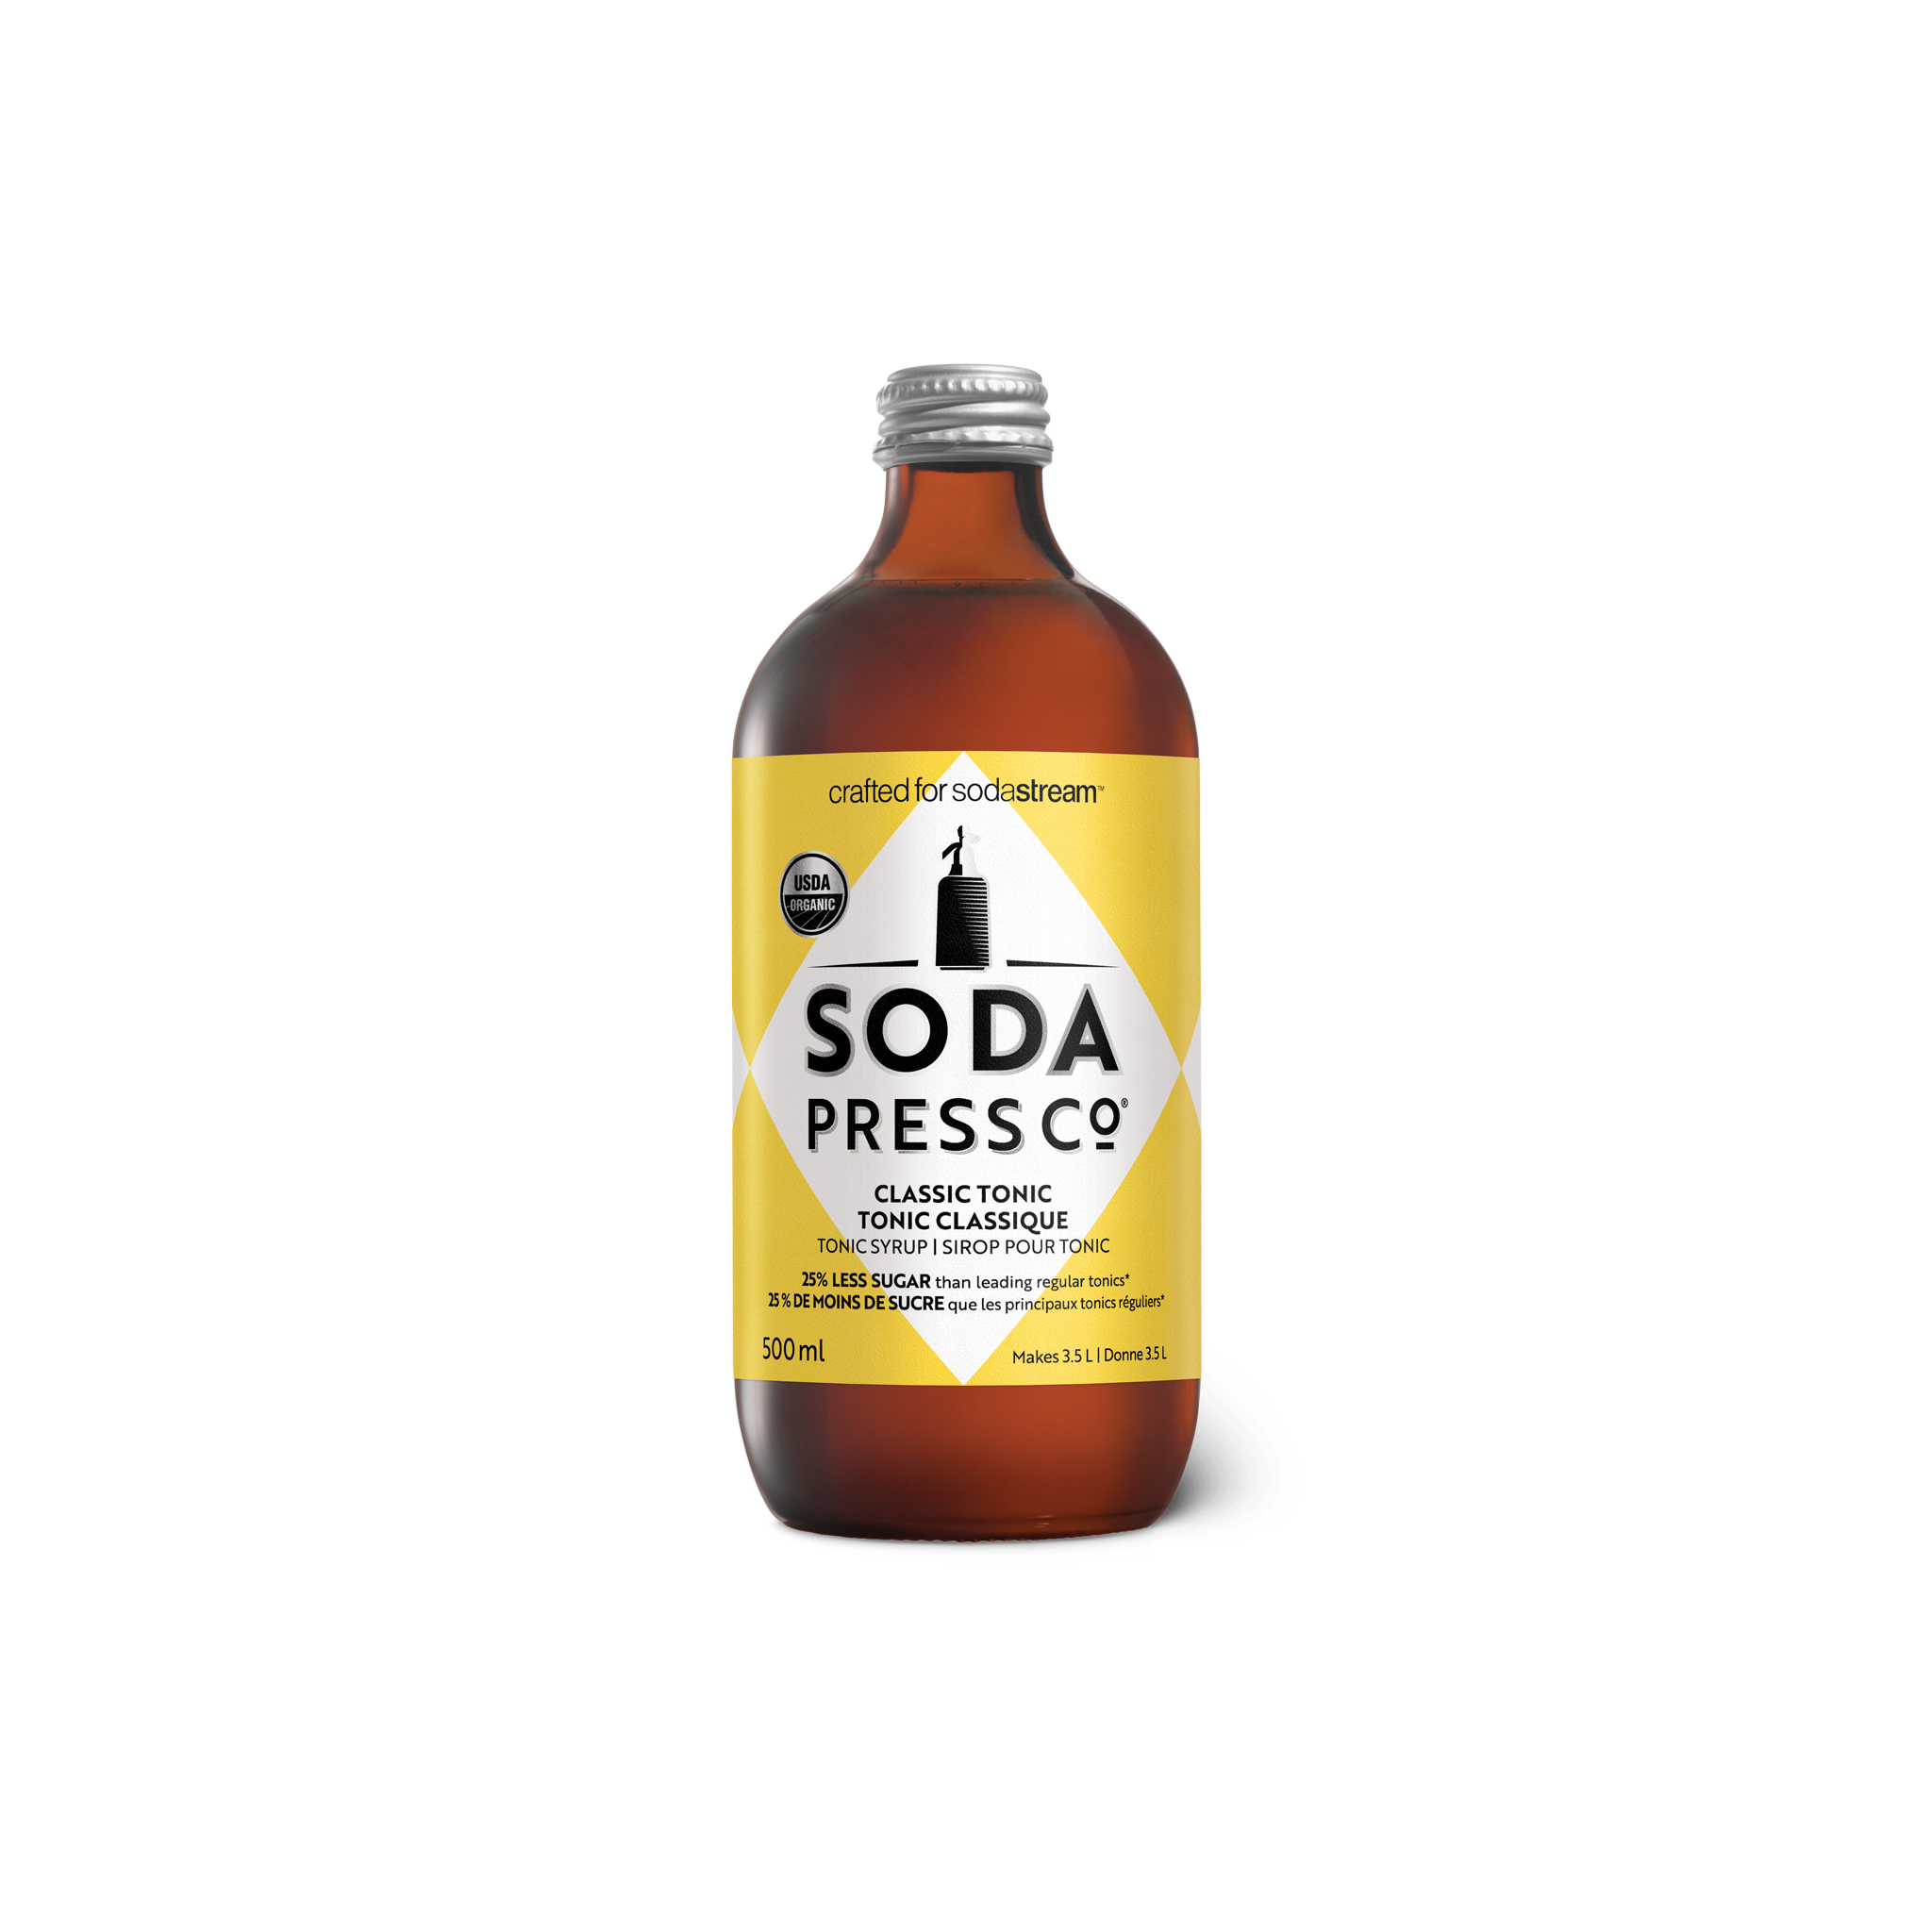 Soda Press Classic Tonic sodastream